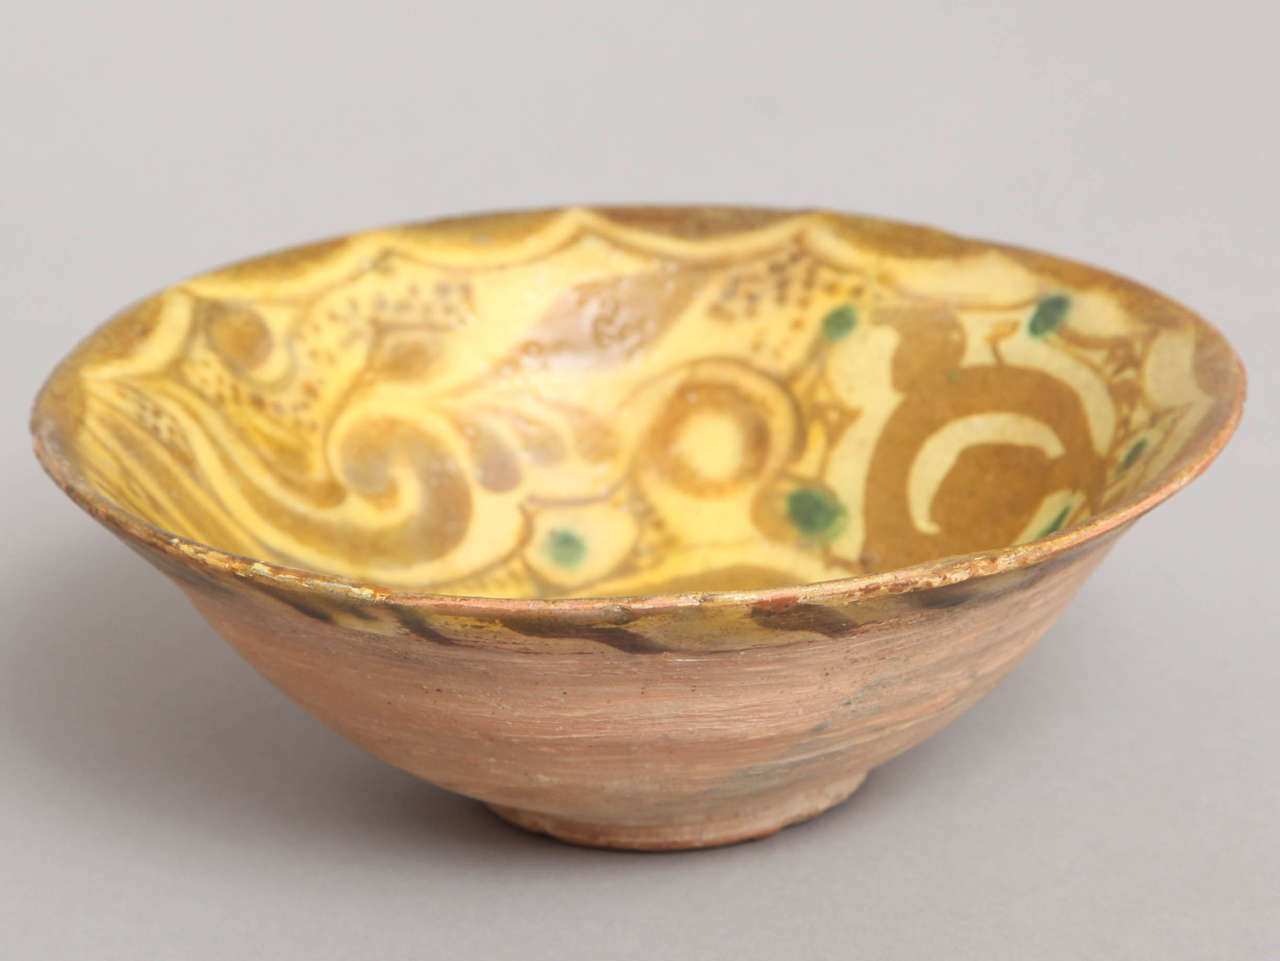 Nishapur, Persia circa 1300-1400 
Decorated earthenware bowl with dove and circular motifs.